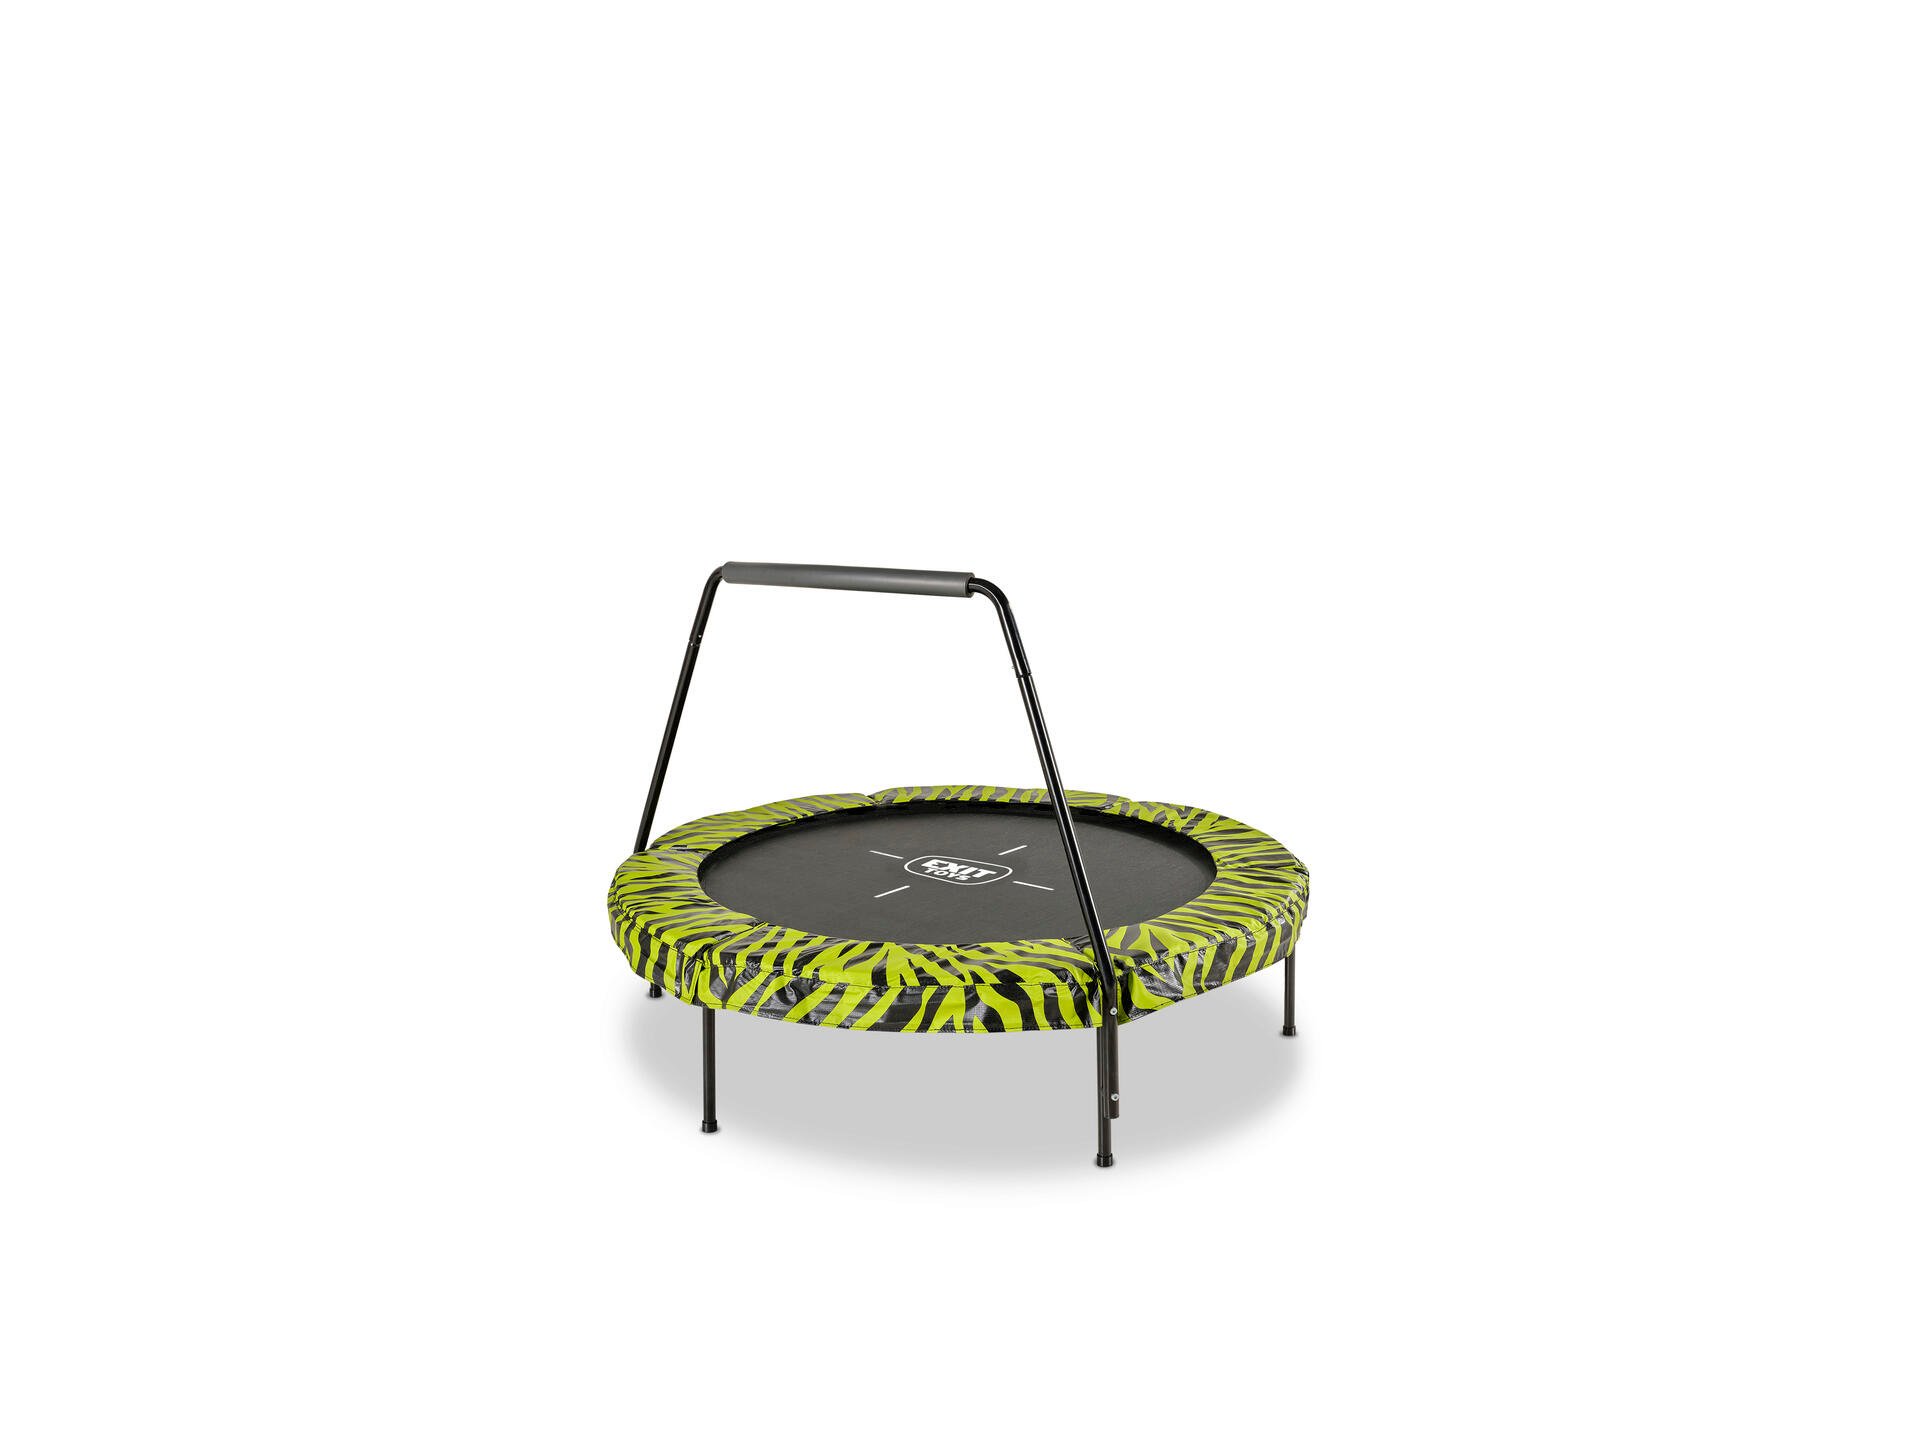 Exit Toys Tiggy Junior trampoline 140cm + beugel zwart/groen